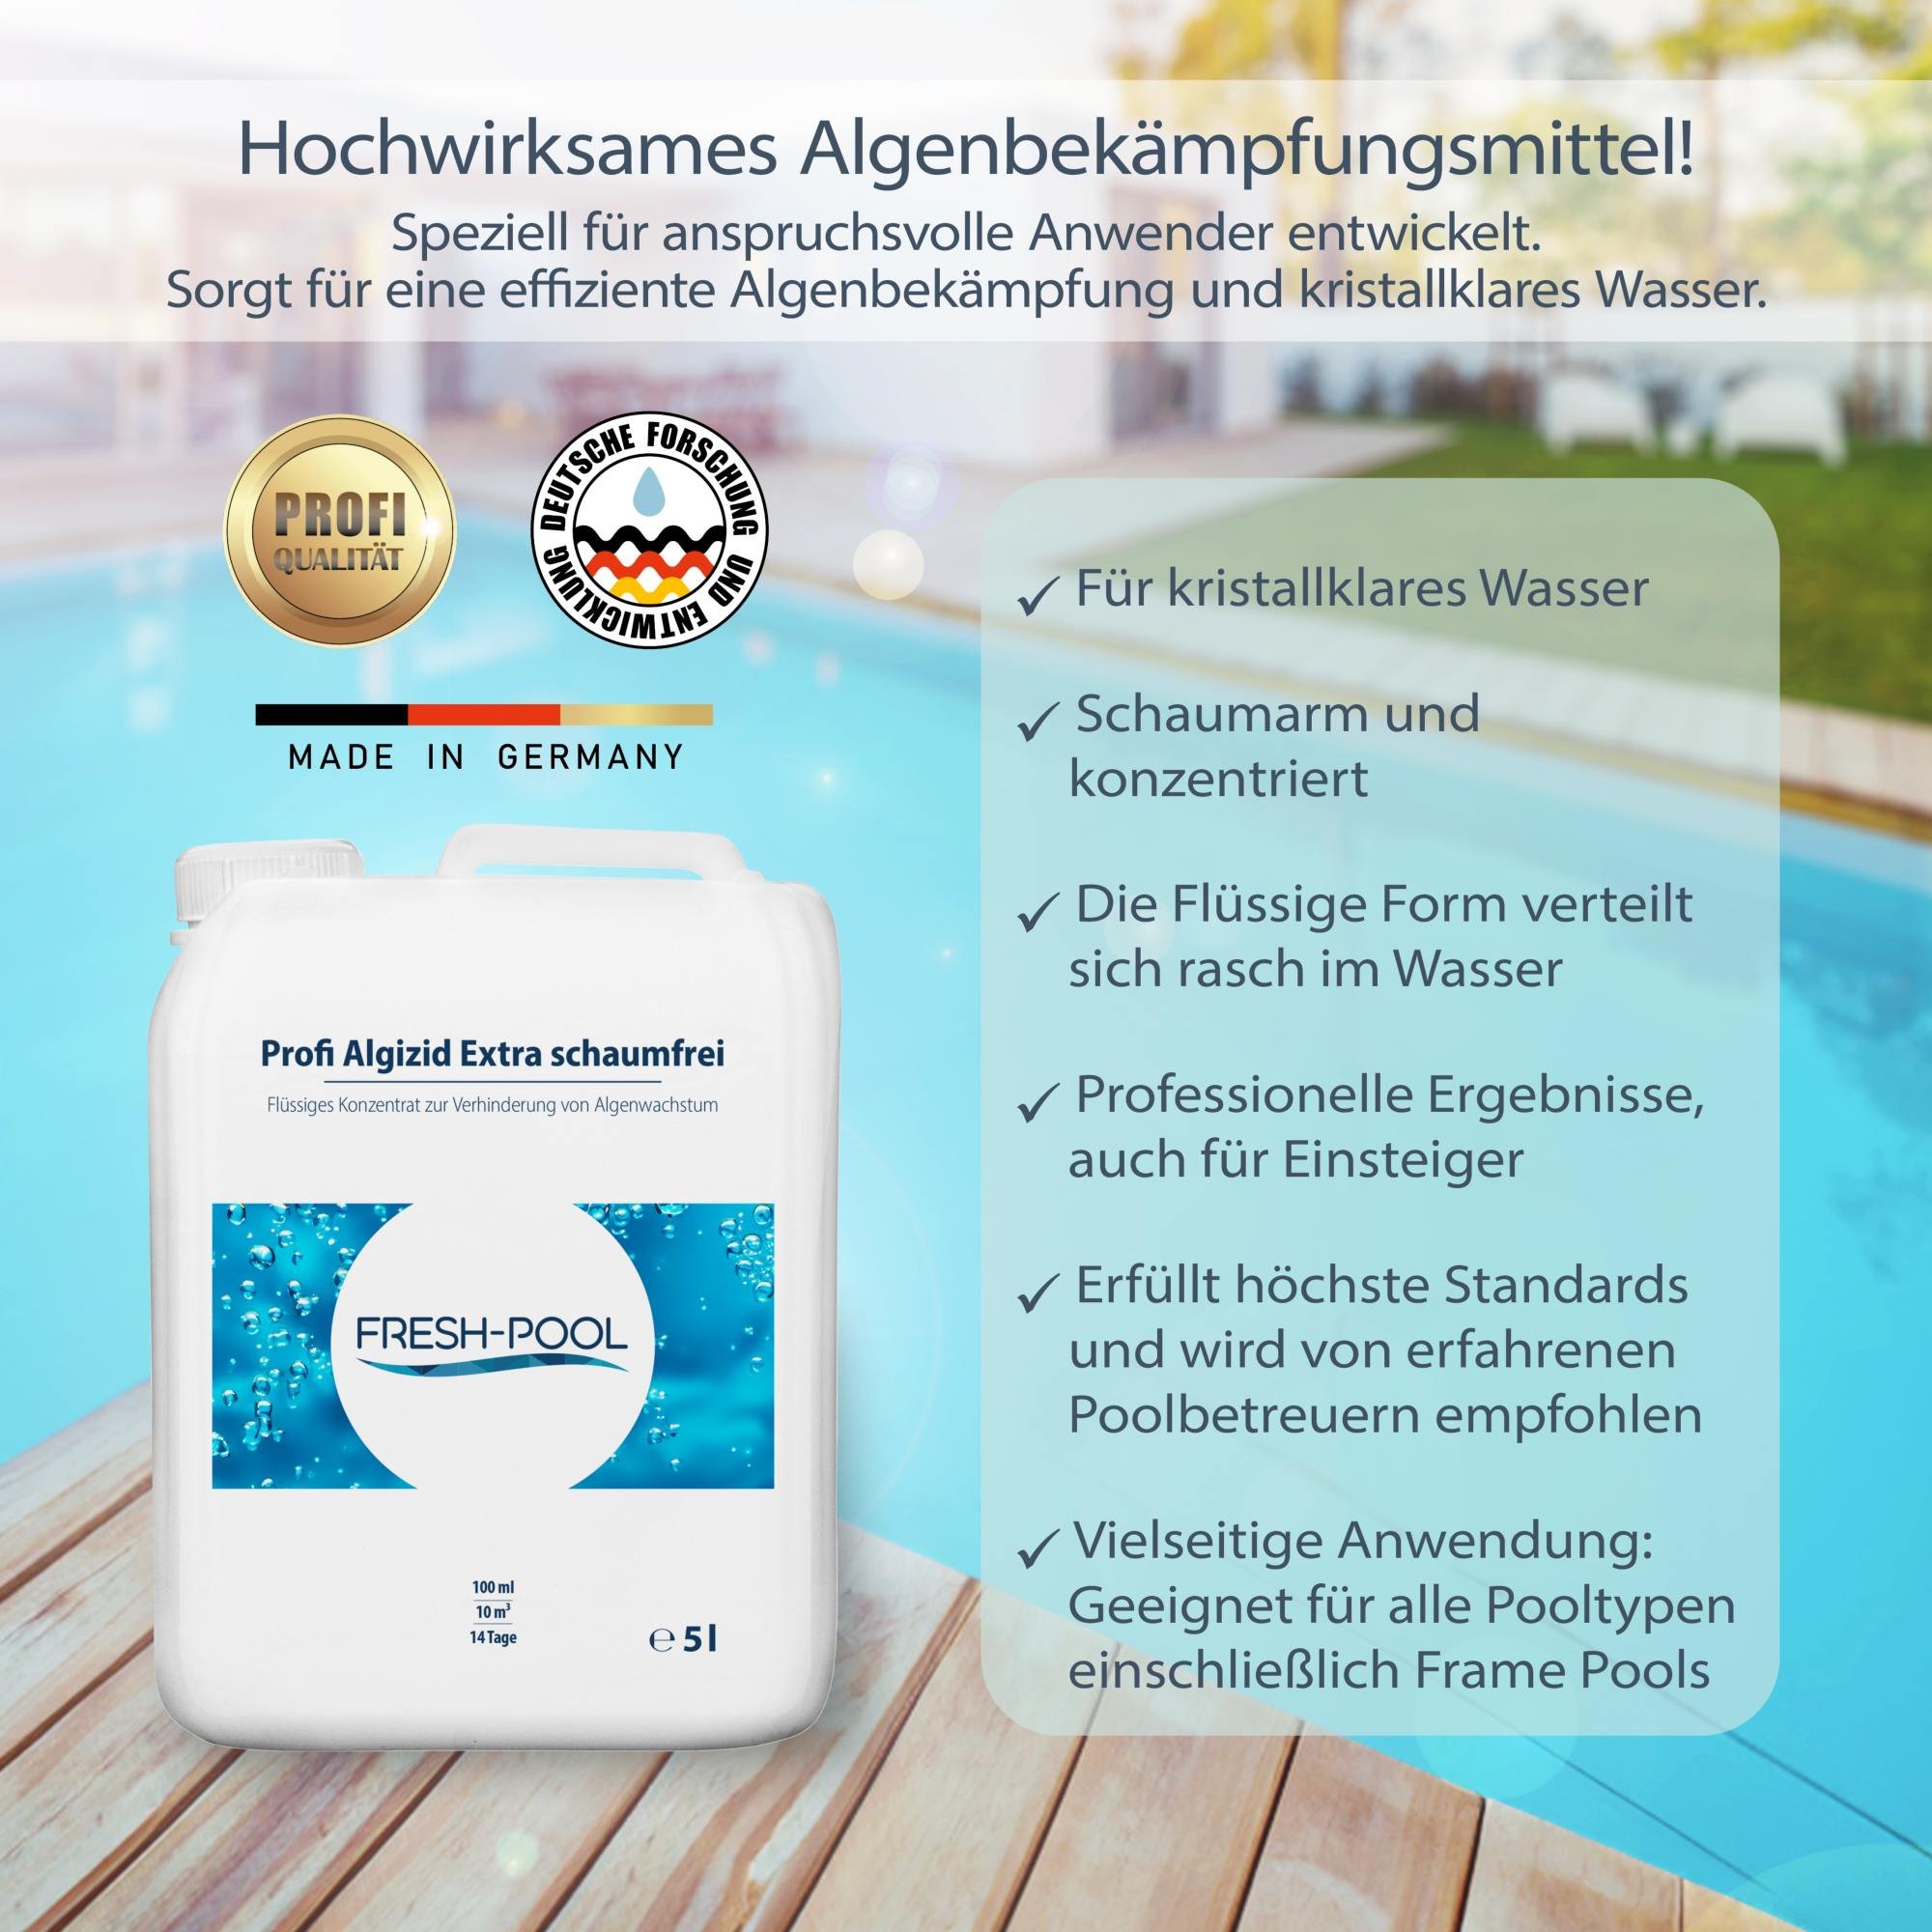 Fresh-Pool Profi Algizid Extra schaumfrei 5 Liter